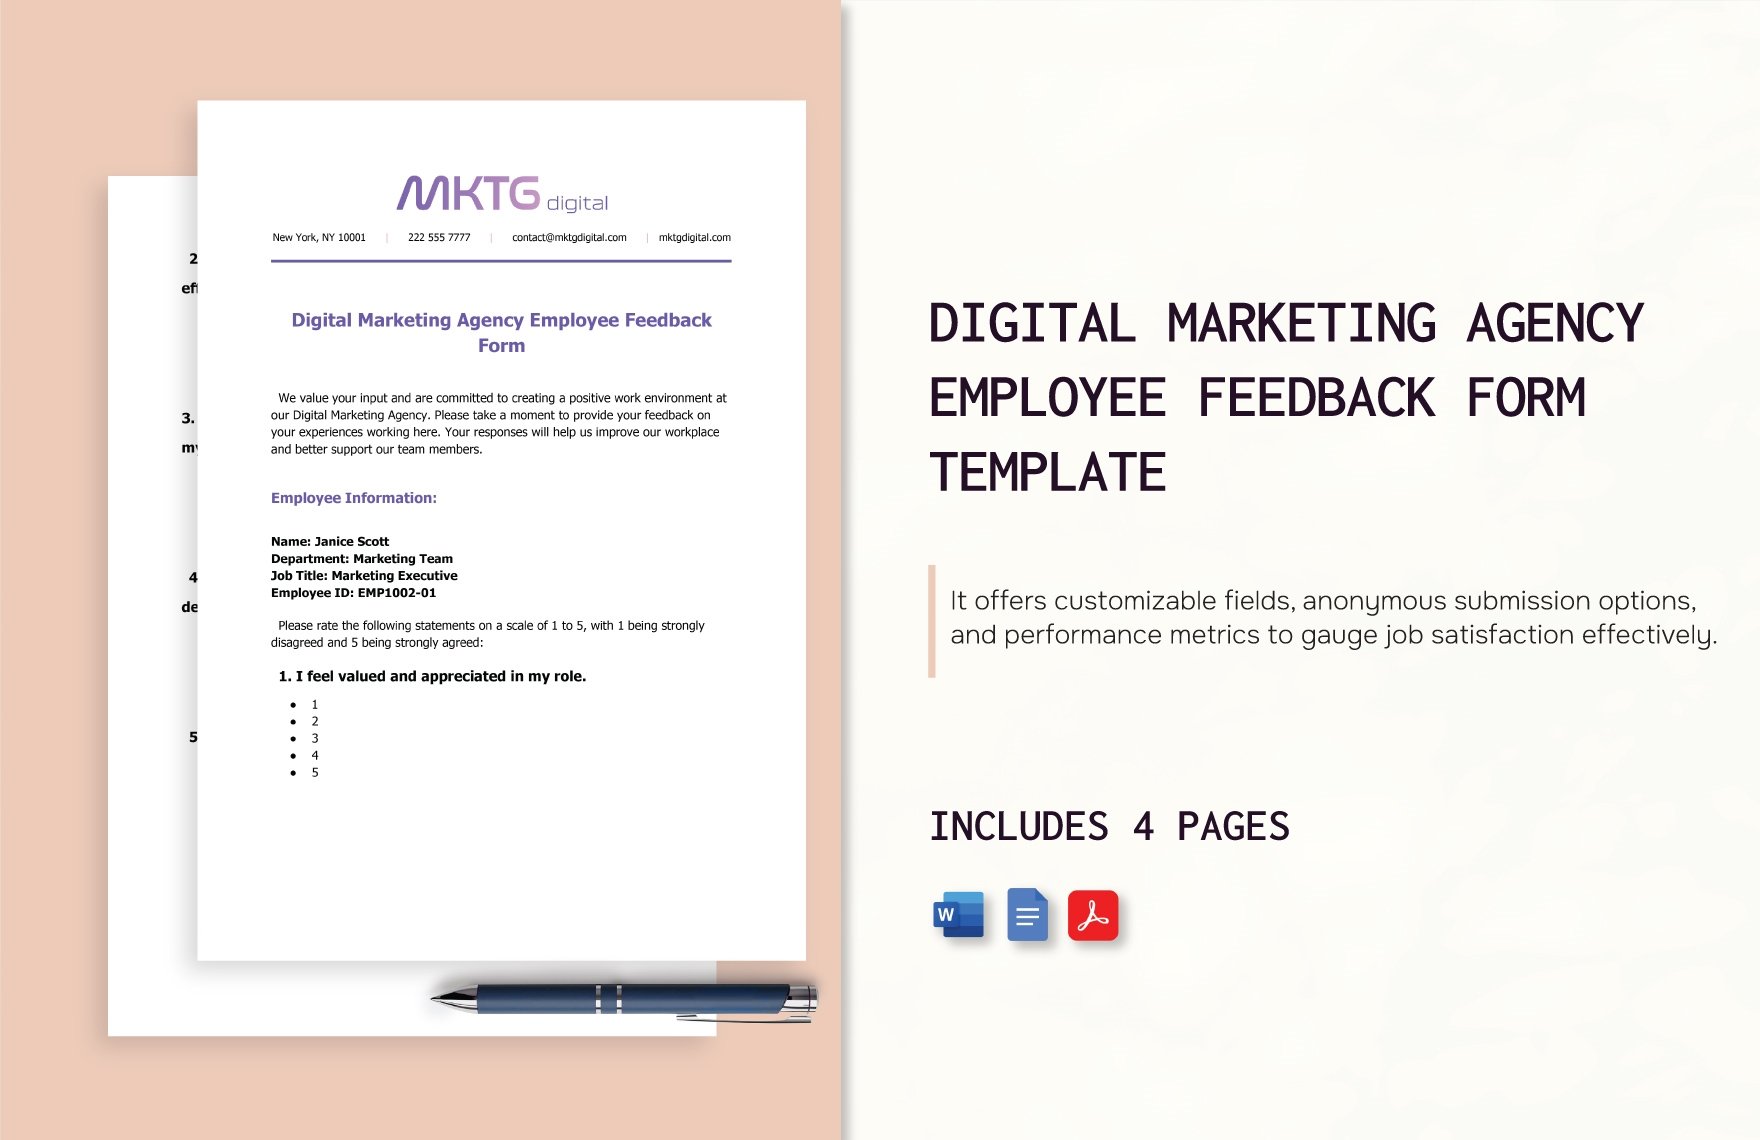 Digital Marketing Agency Employee Feedback Form Template in Word, Google Docs, PDF